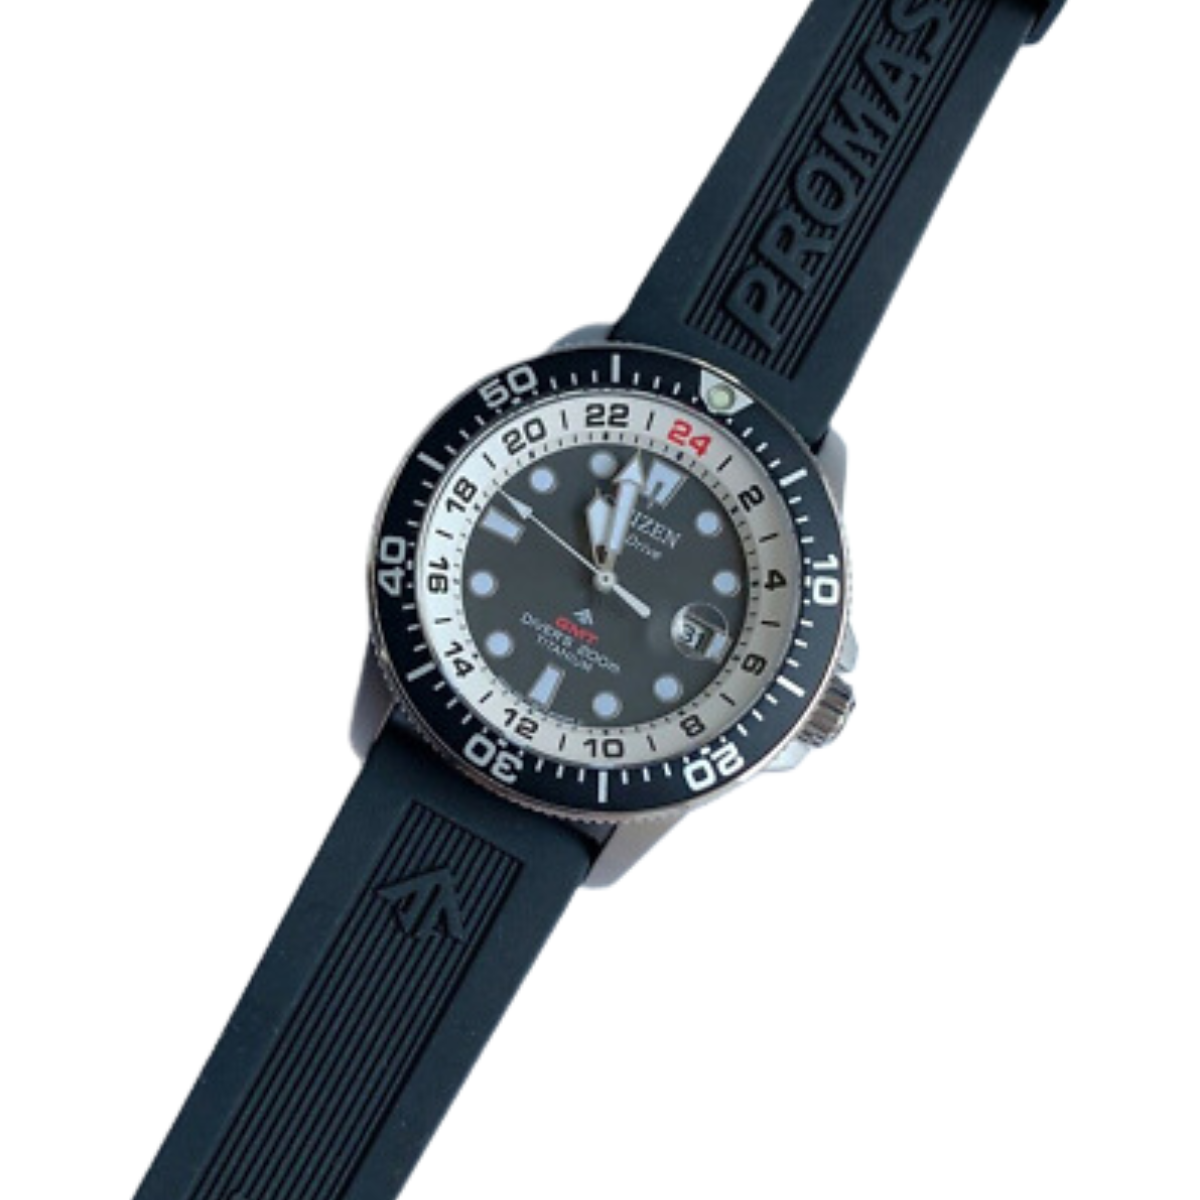 Citizen Promaster Marine GMT 200m Eco-Drive Men's Watch BJ7110-11E